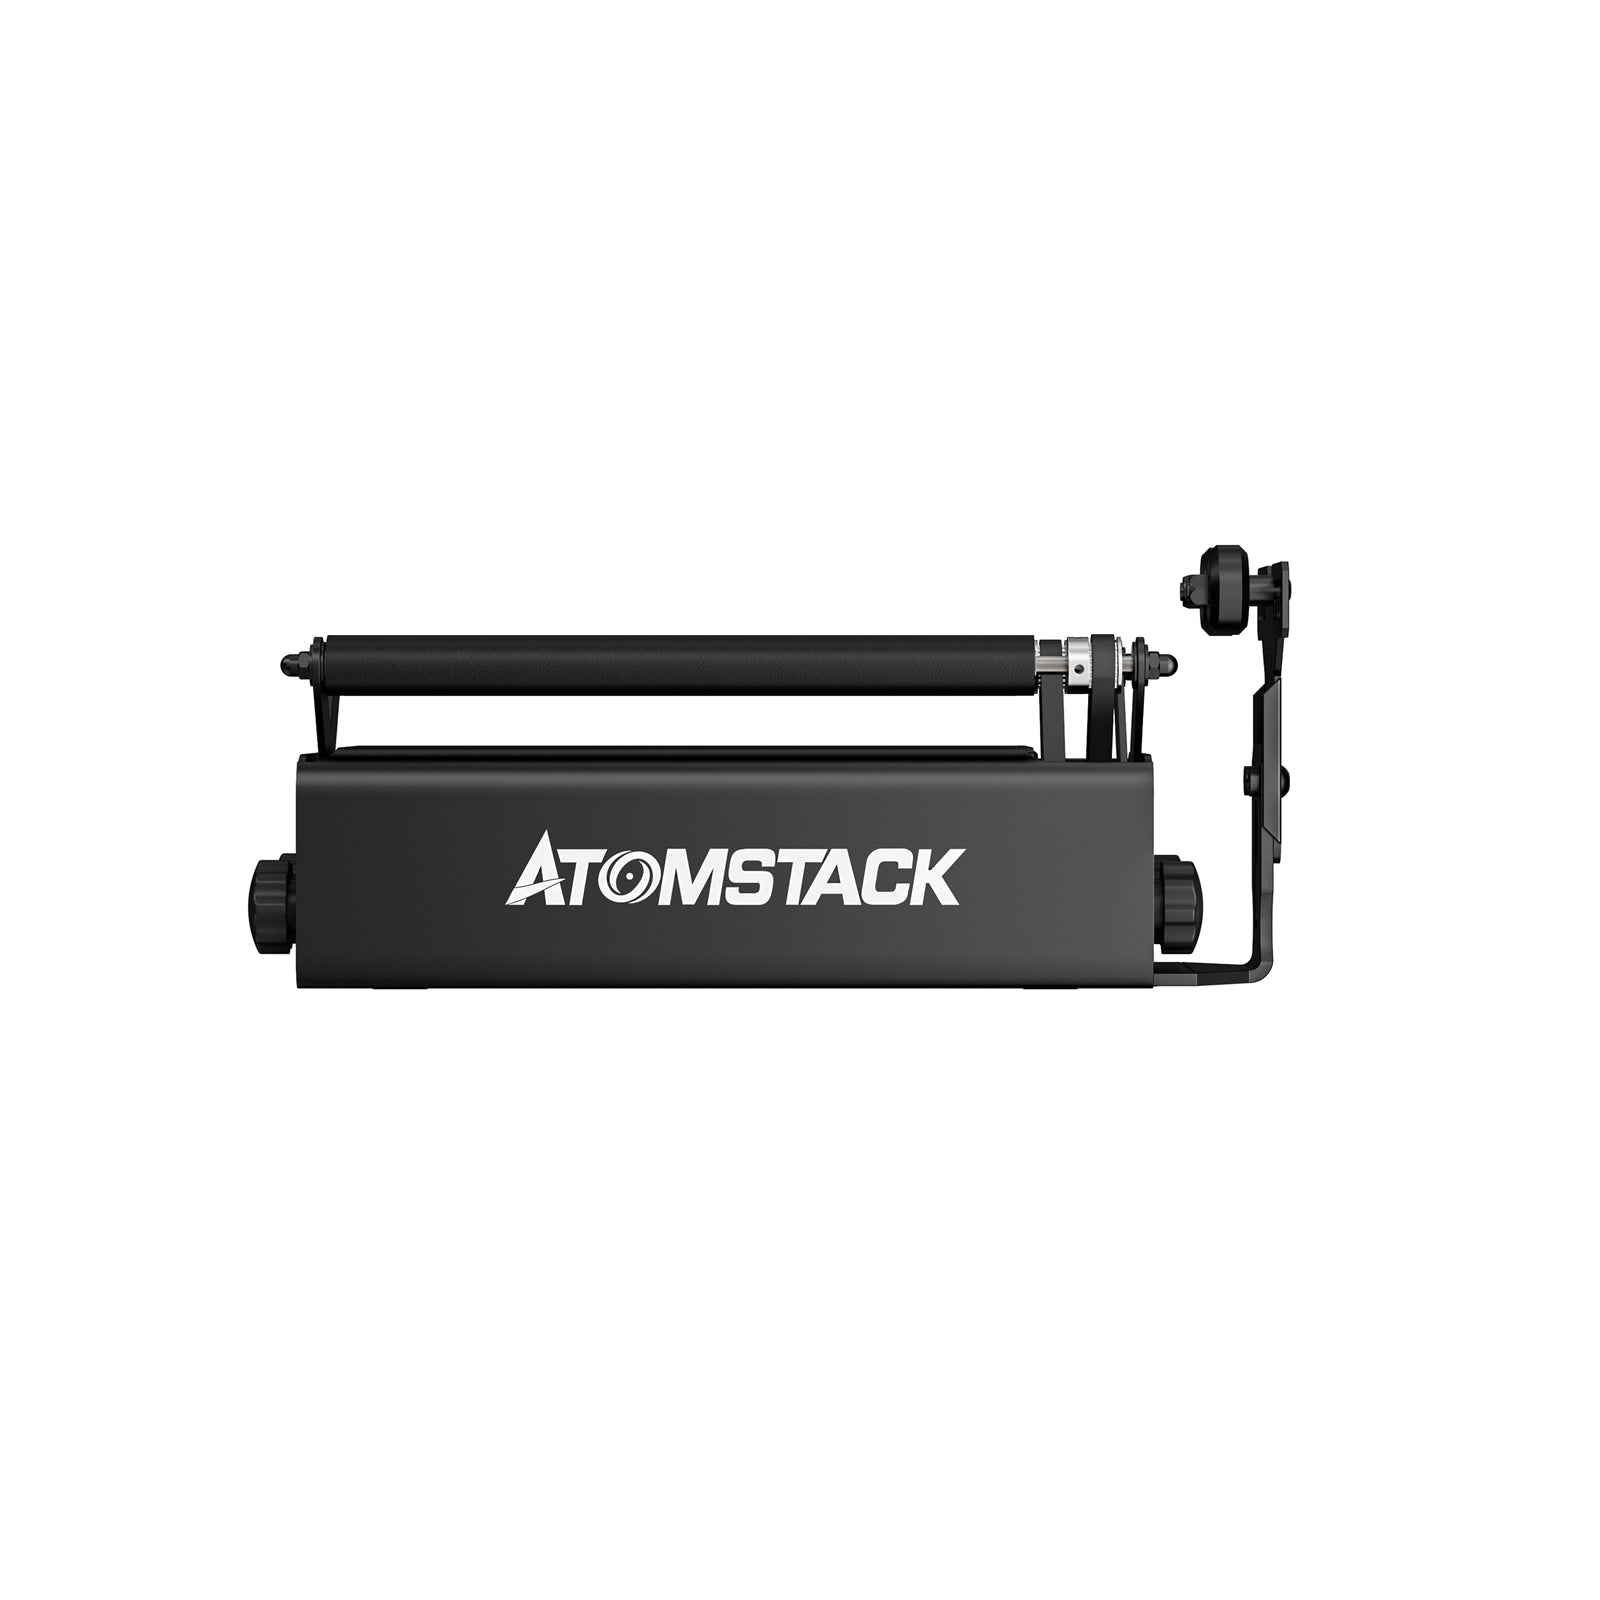 ATOMSTACK Atomstack R3 Rotationswalze, schwarz pro